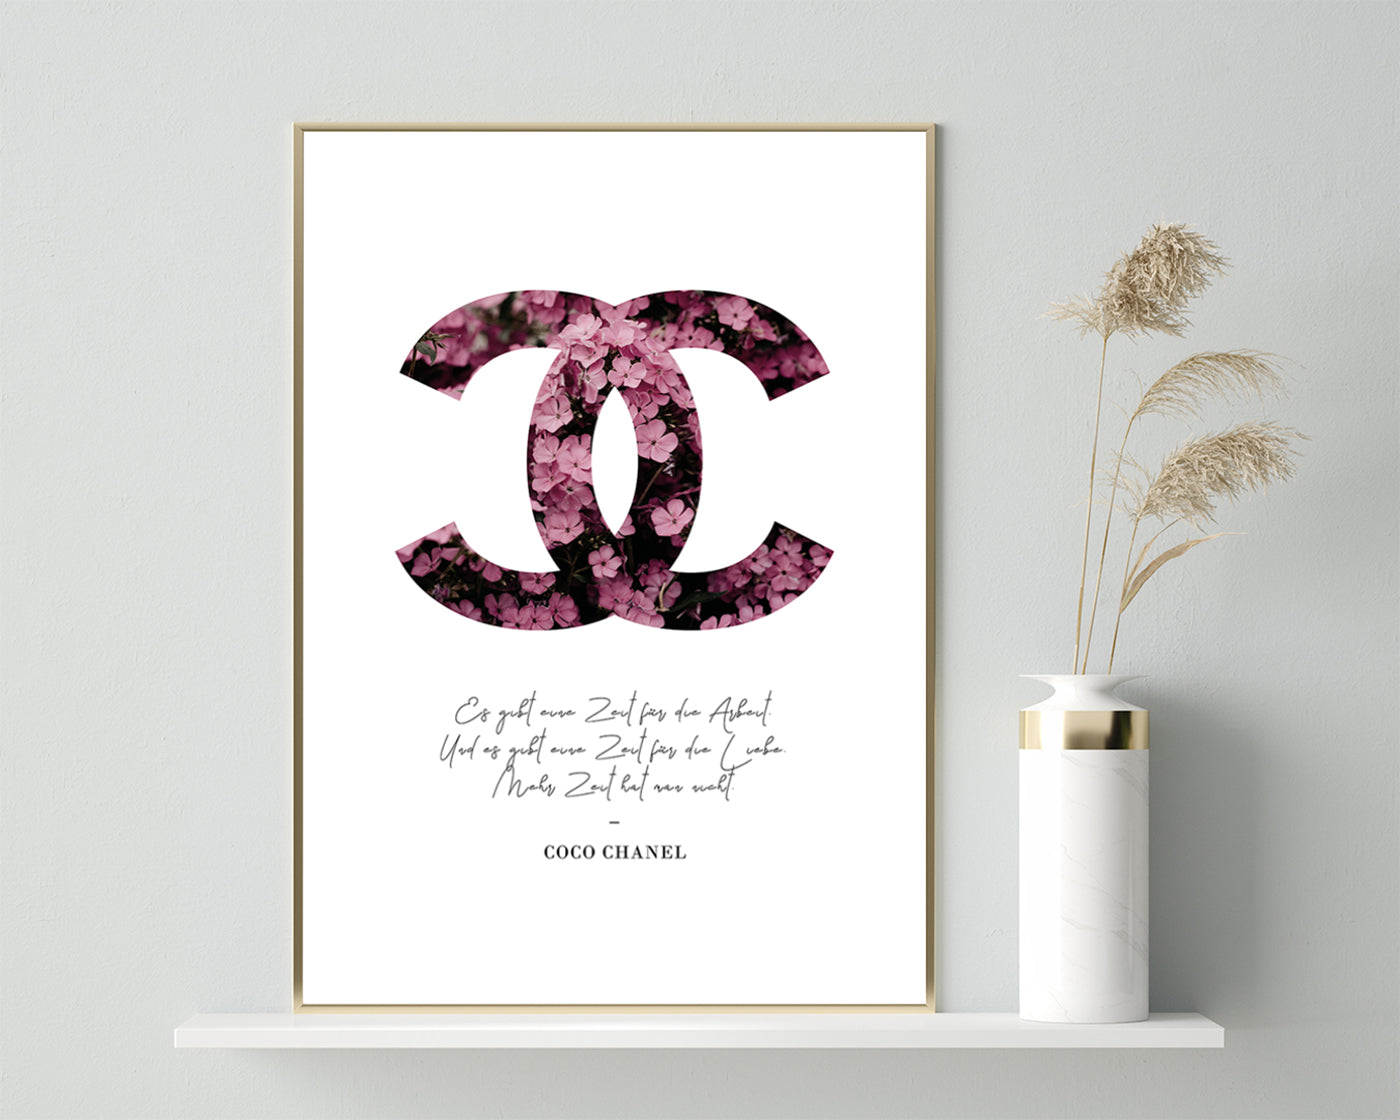 Flower Art, Original 5x5 Canvas, Coco Chanel Quote